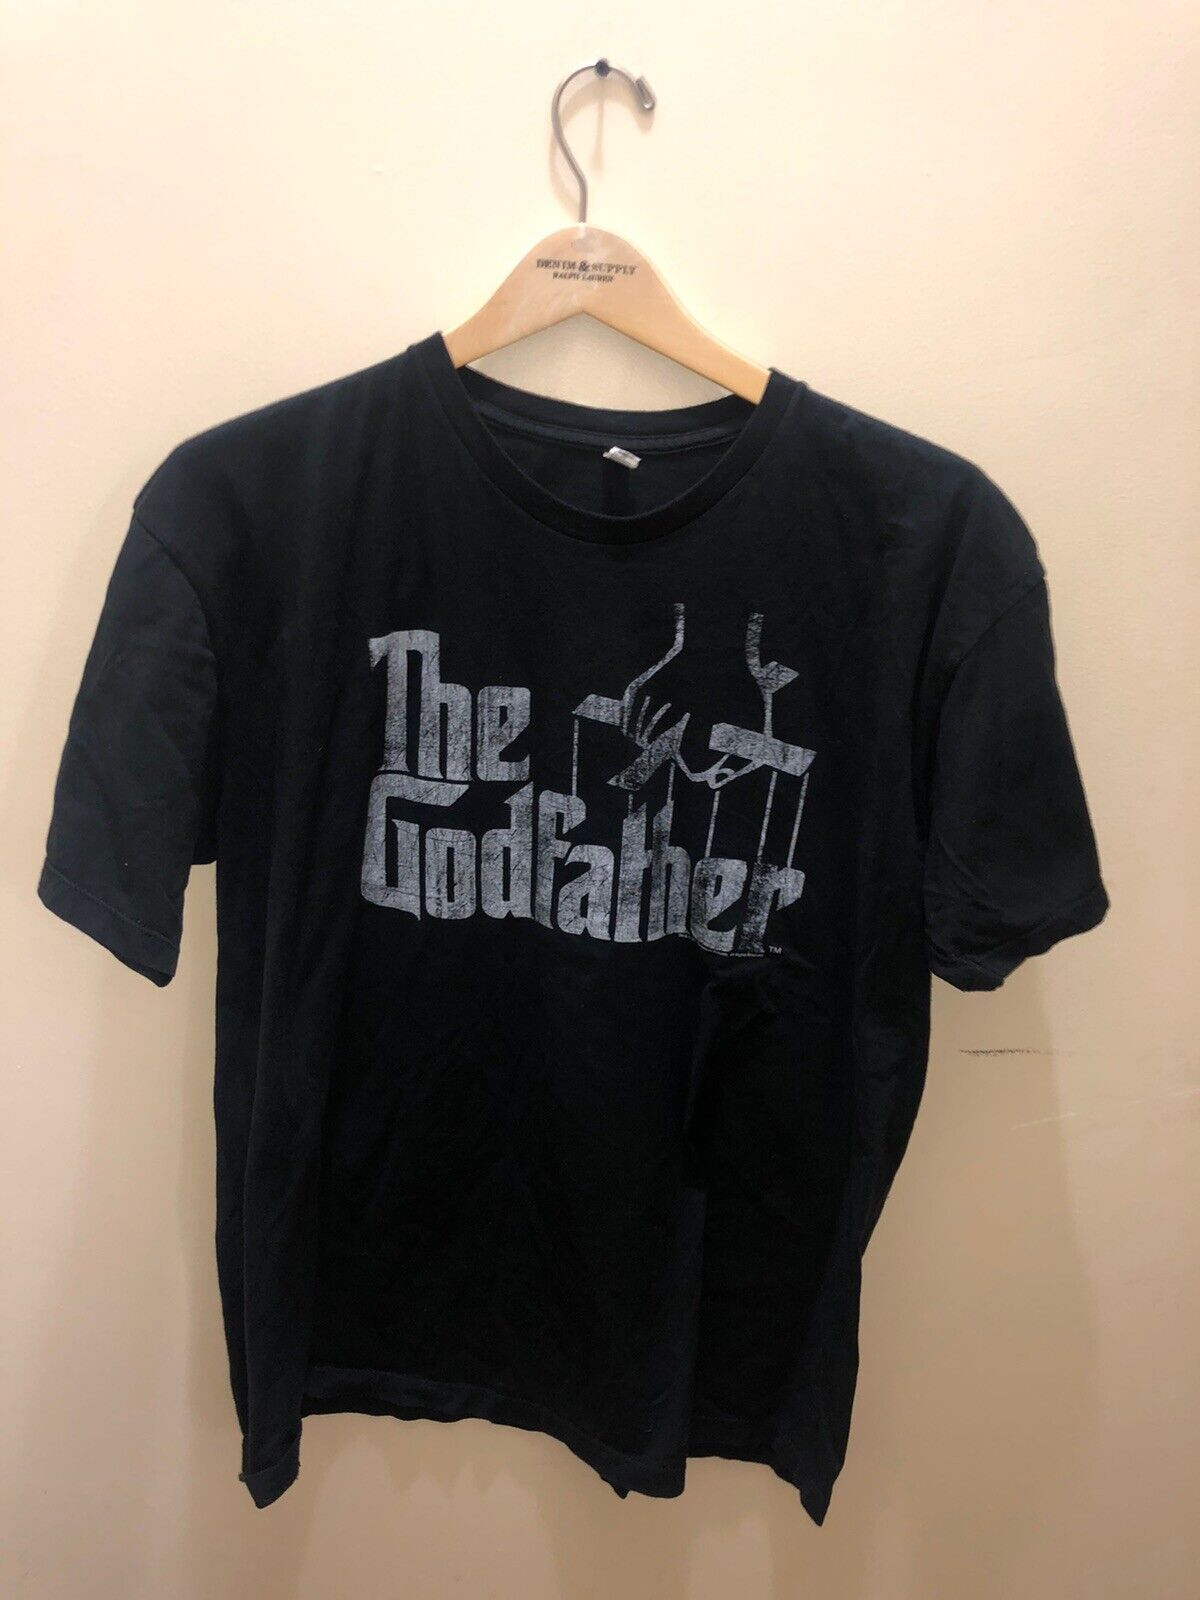 THE GODFATHER T-Shirt SIZE Xl Movie Memorabilia Men's Collectible T-Shirt